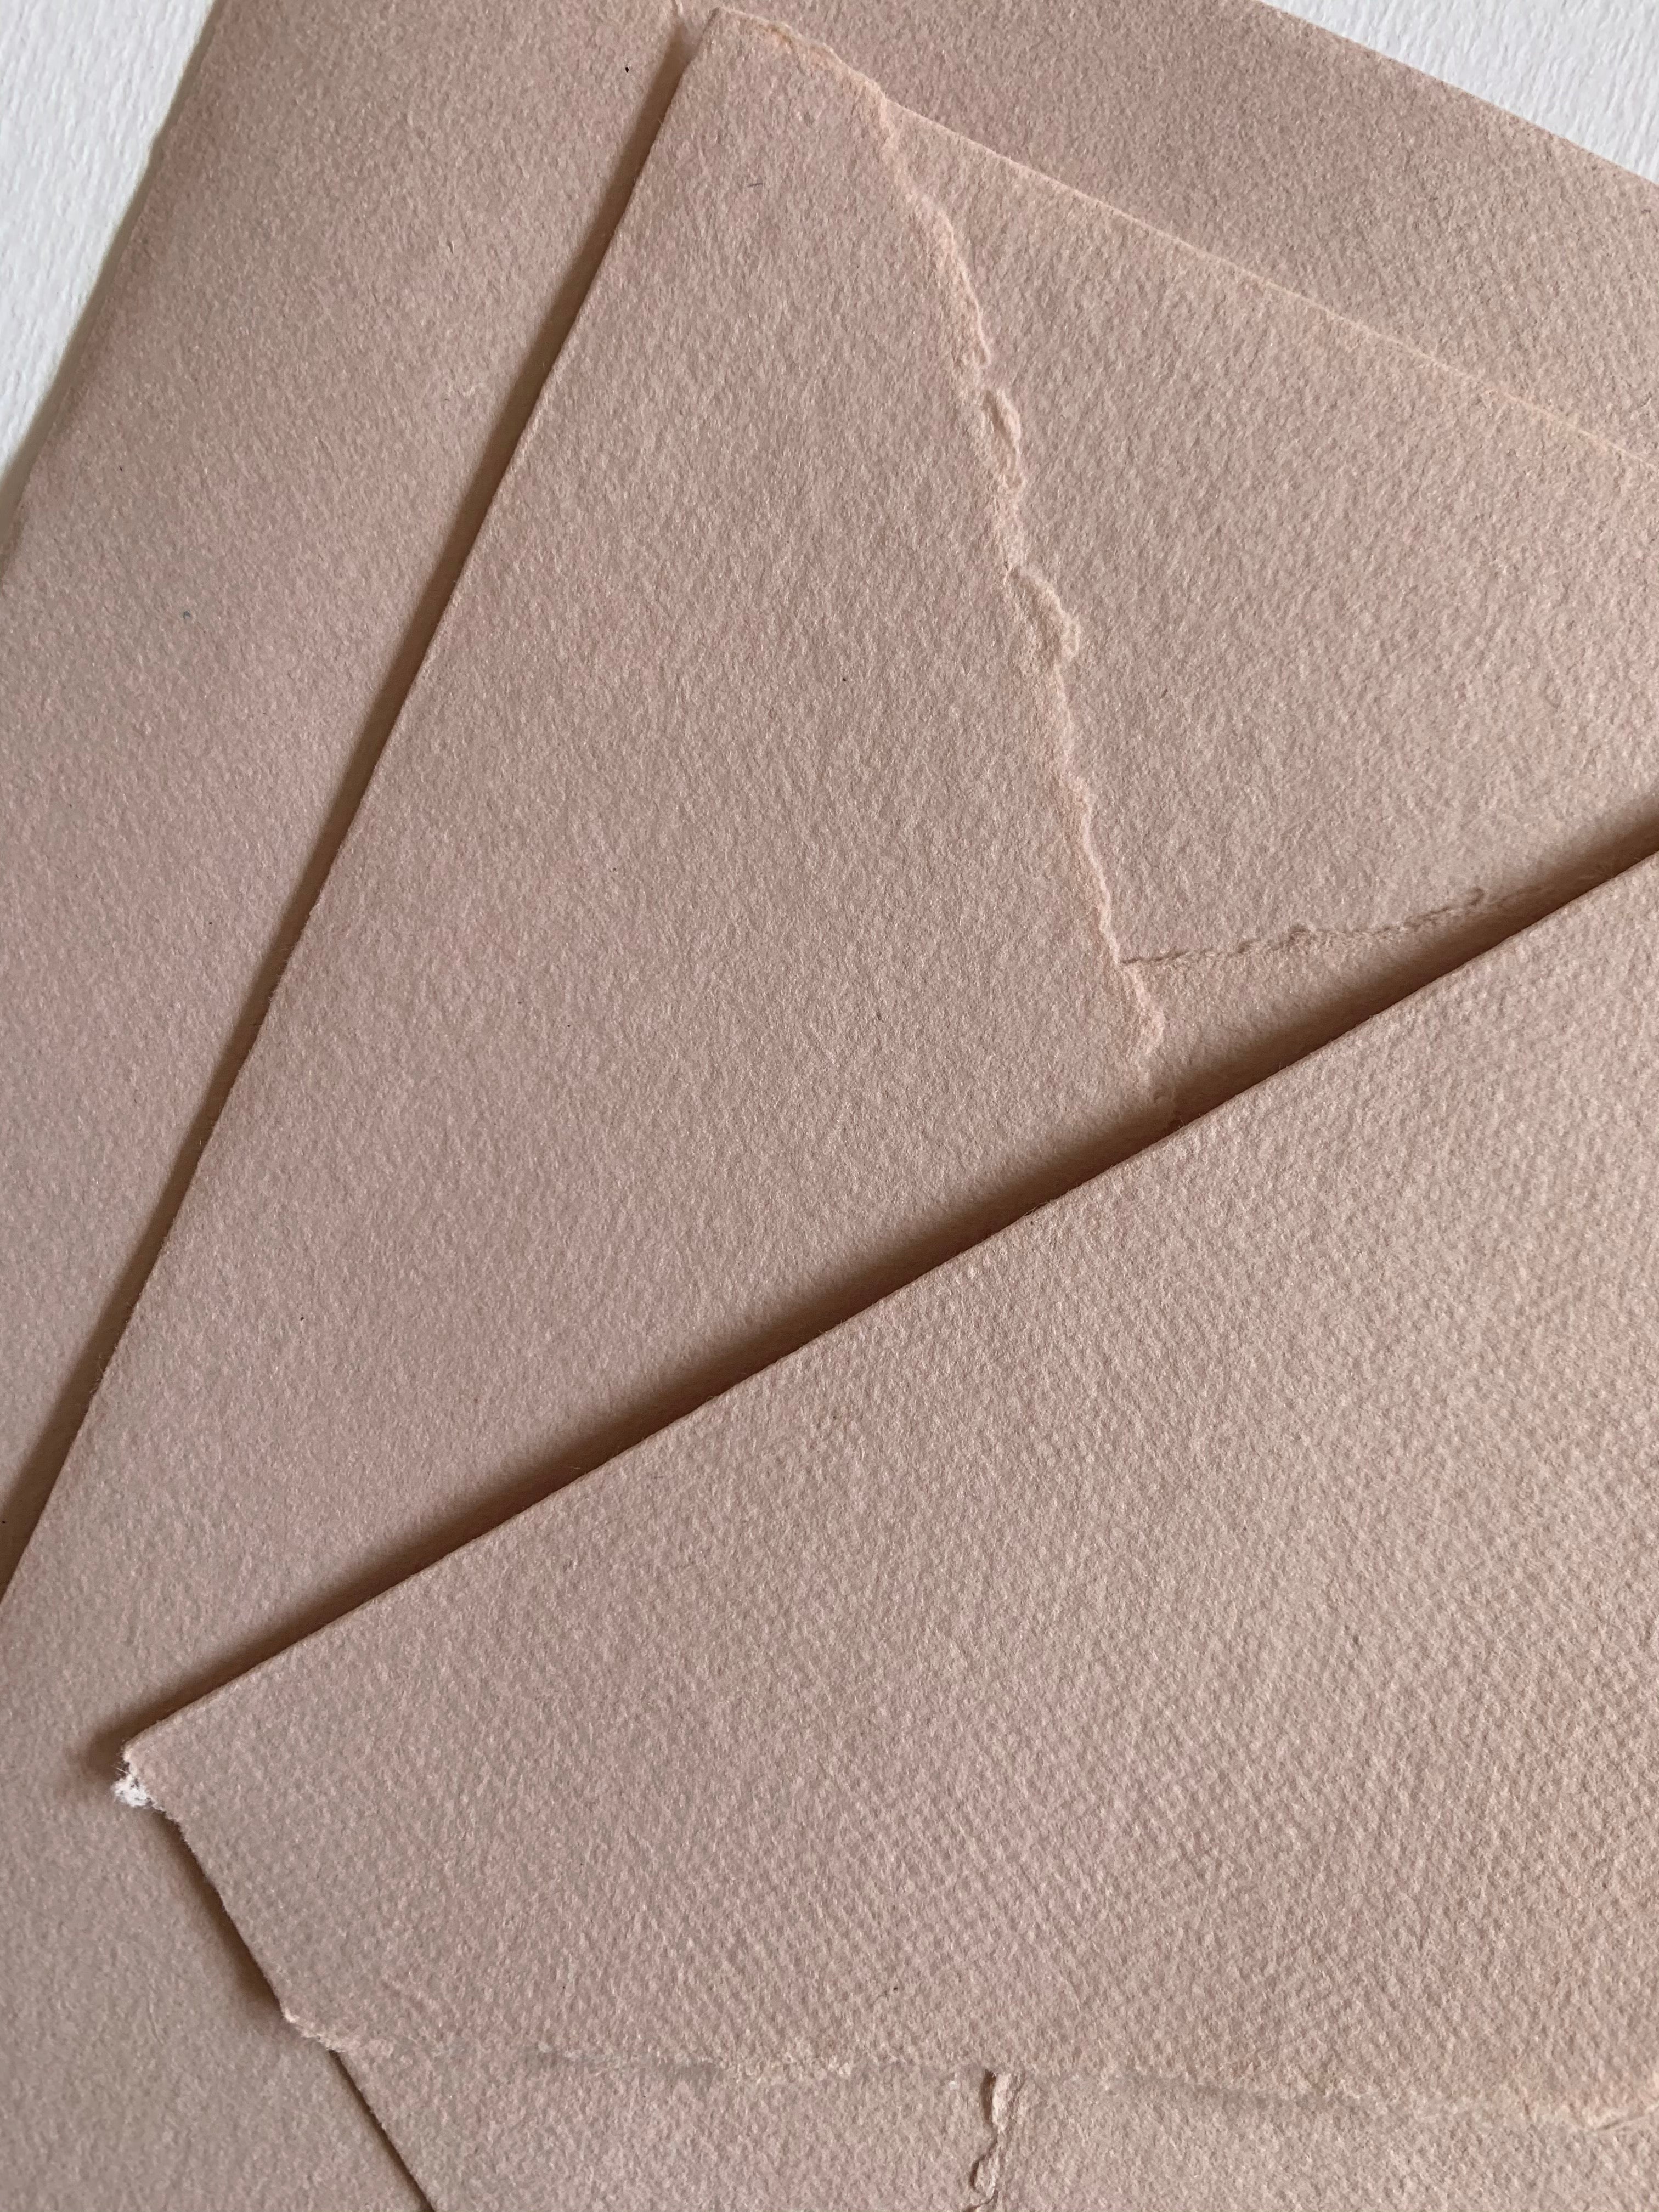 Blush Deckle Edge Cotton Rag Envelopes